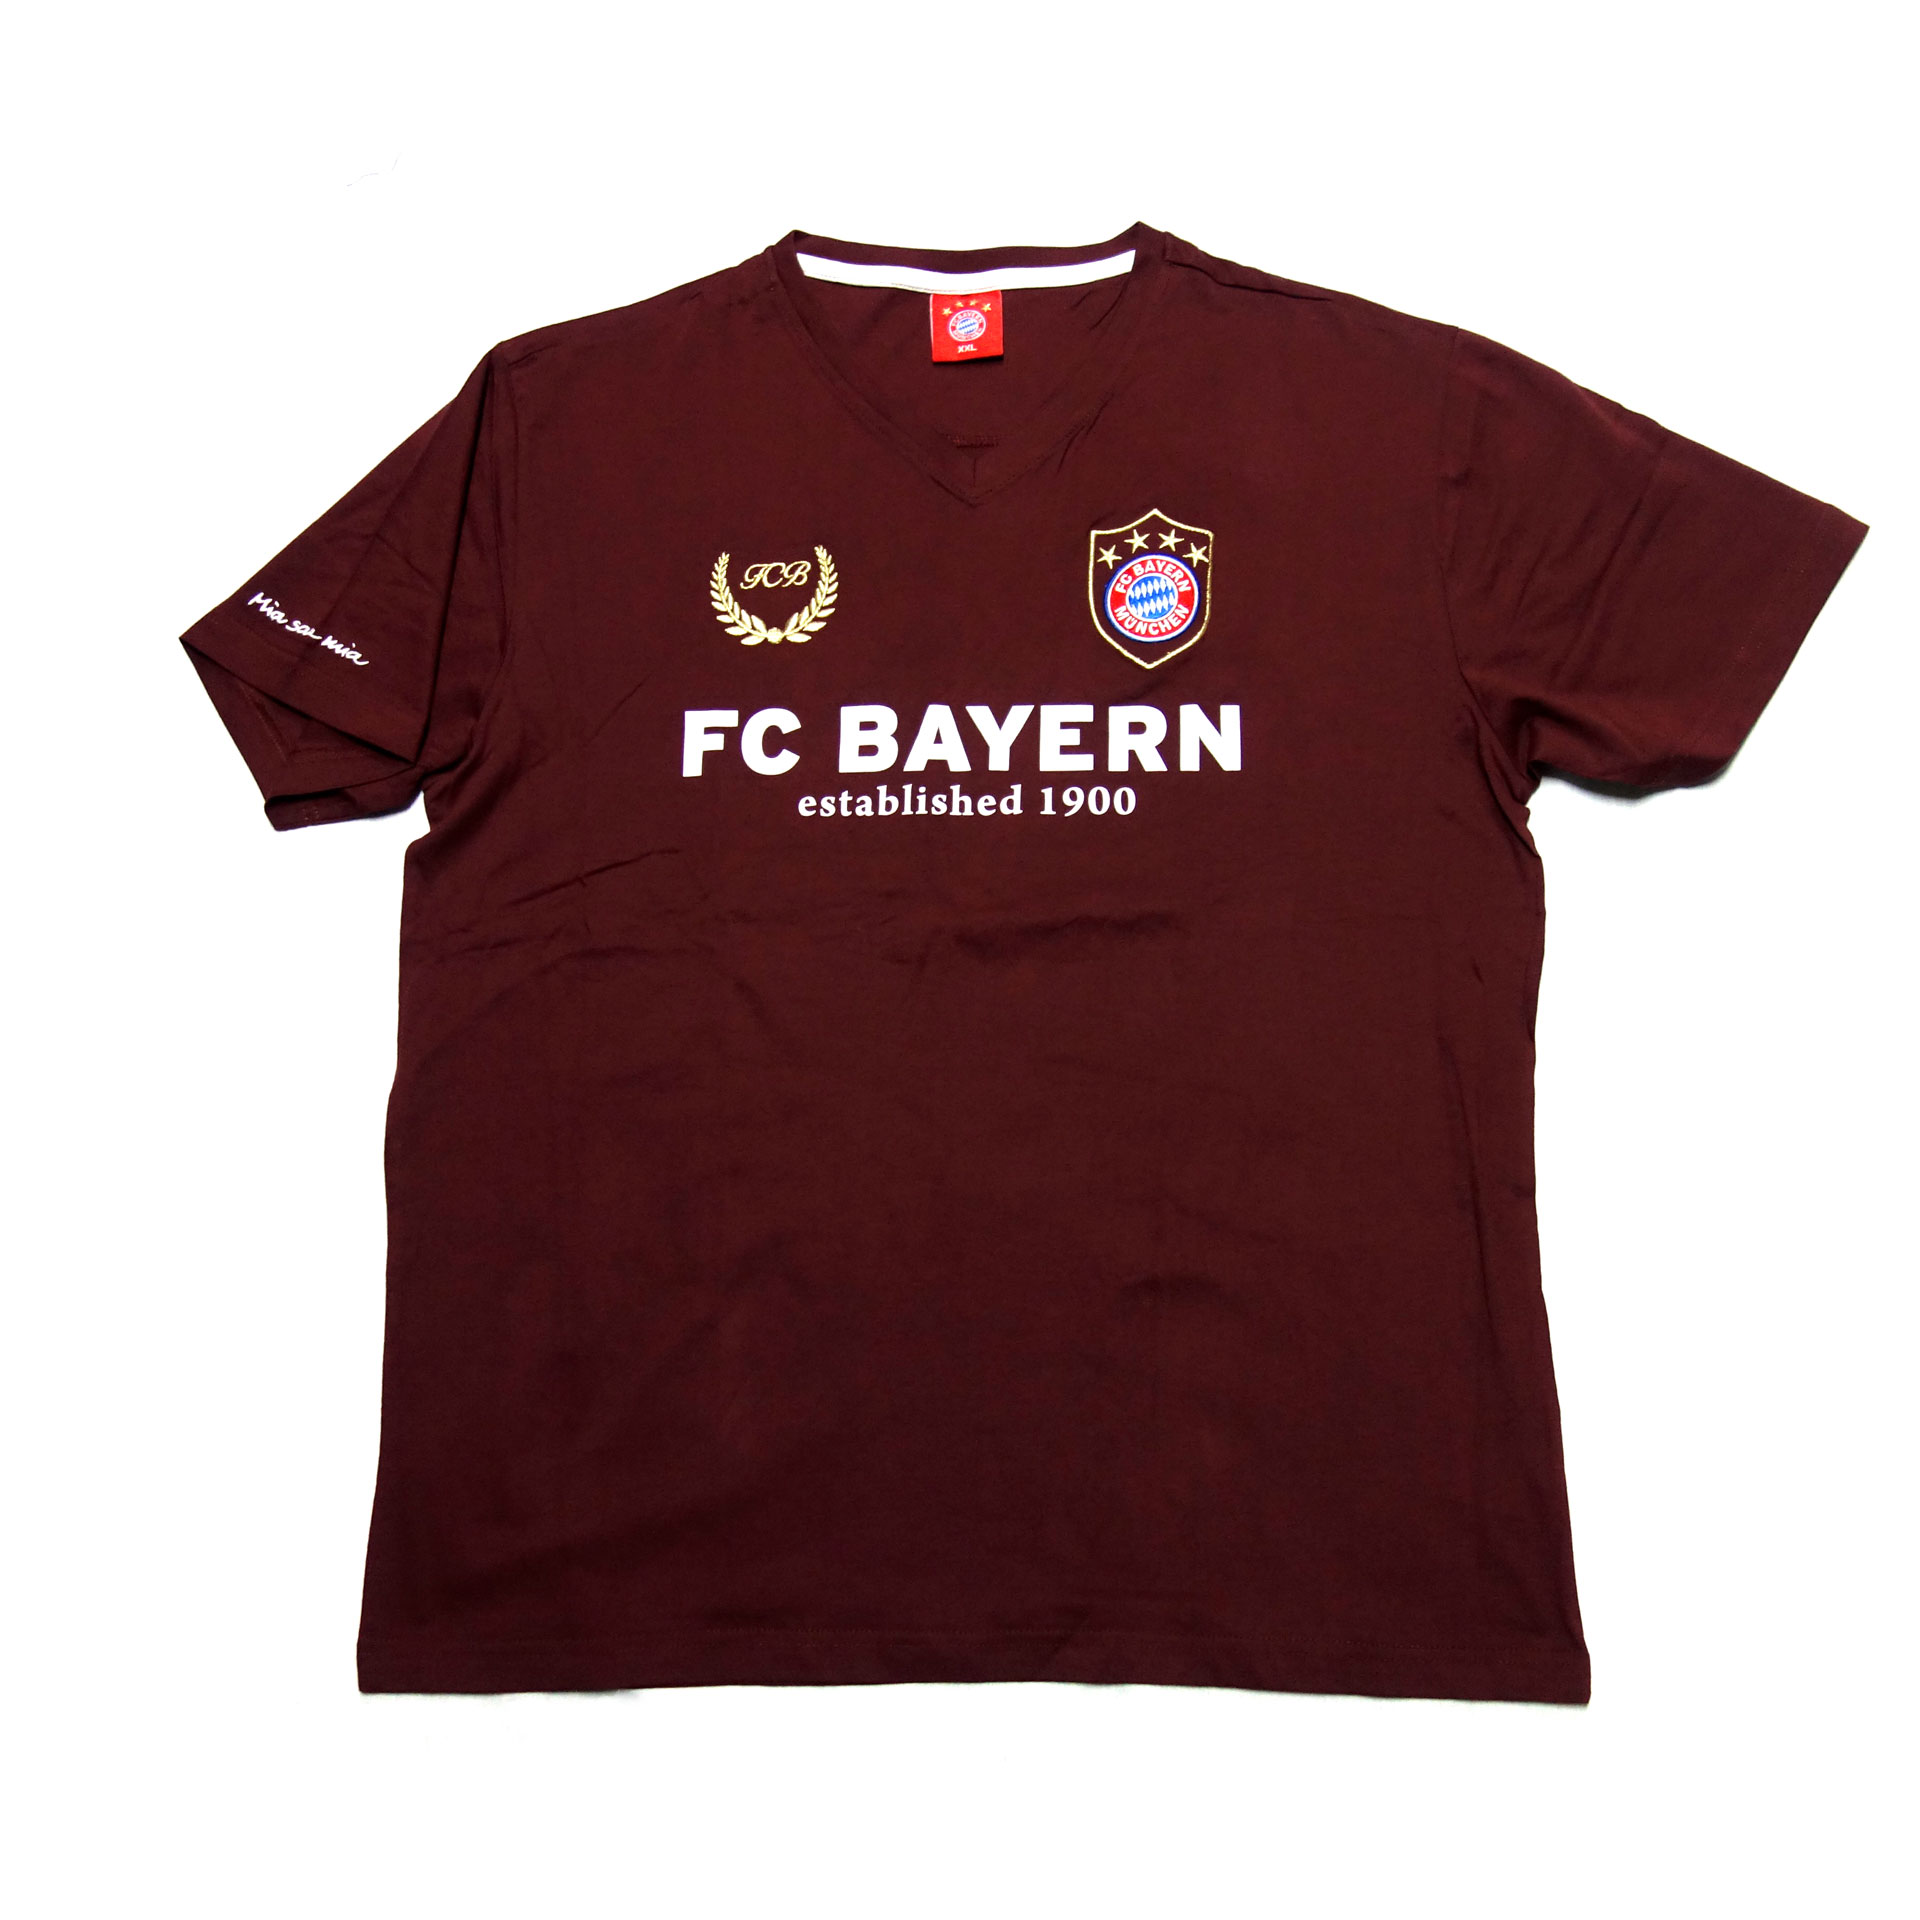 FC Bayern T-Shirt Established 1900